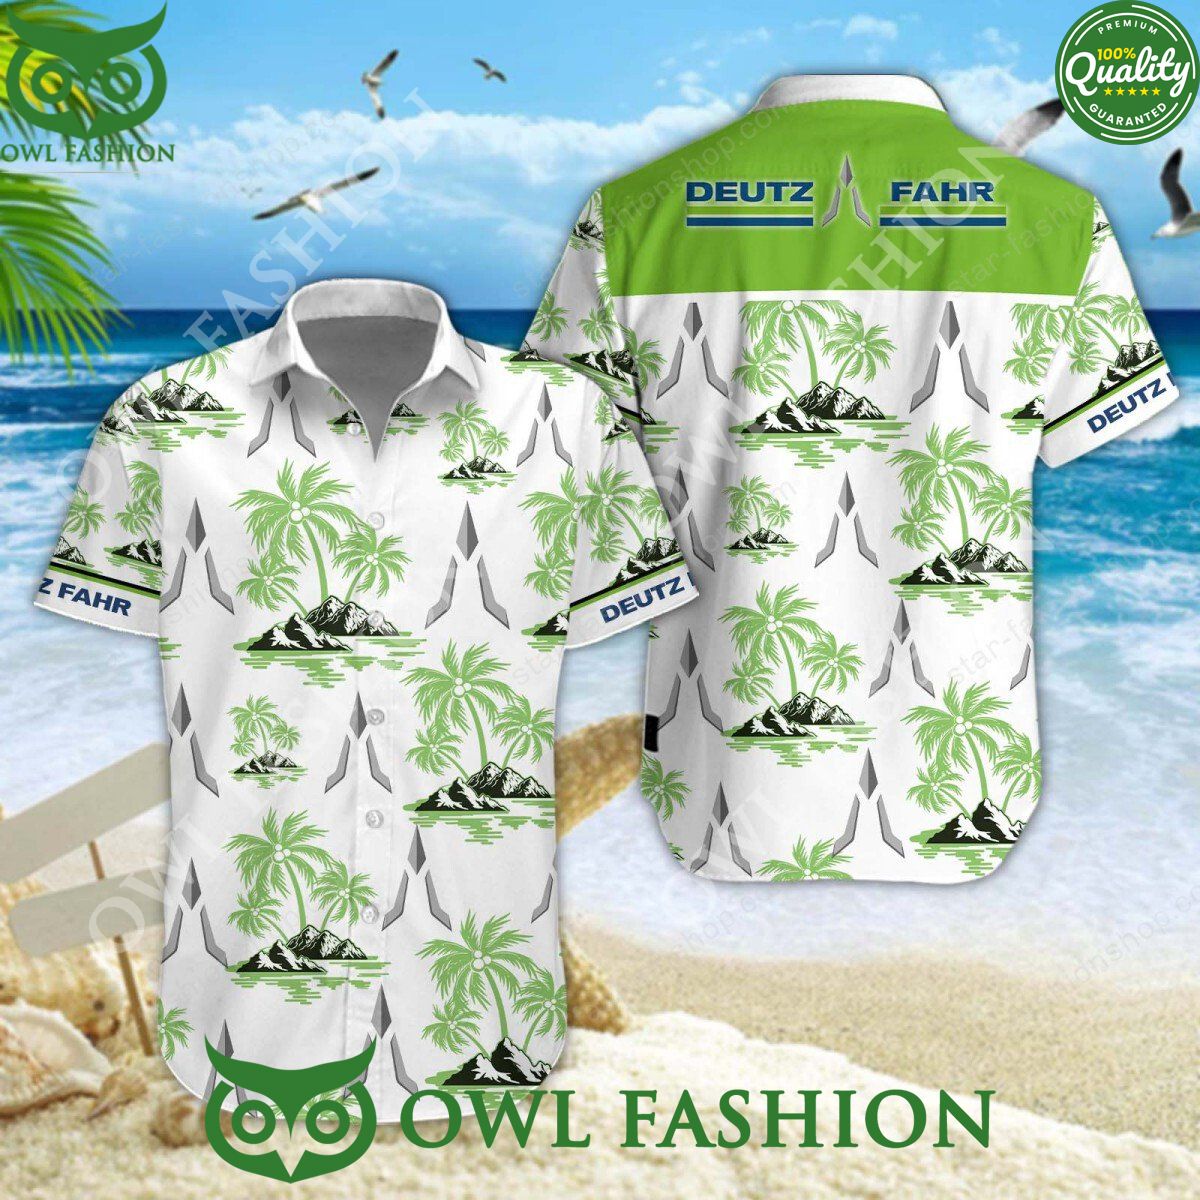 Deutz-Fahr German agricultural machinery manufacturer hawaiian shirt and short